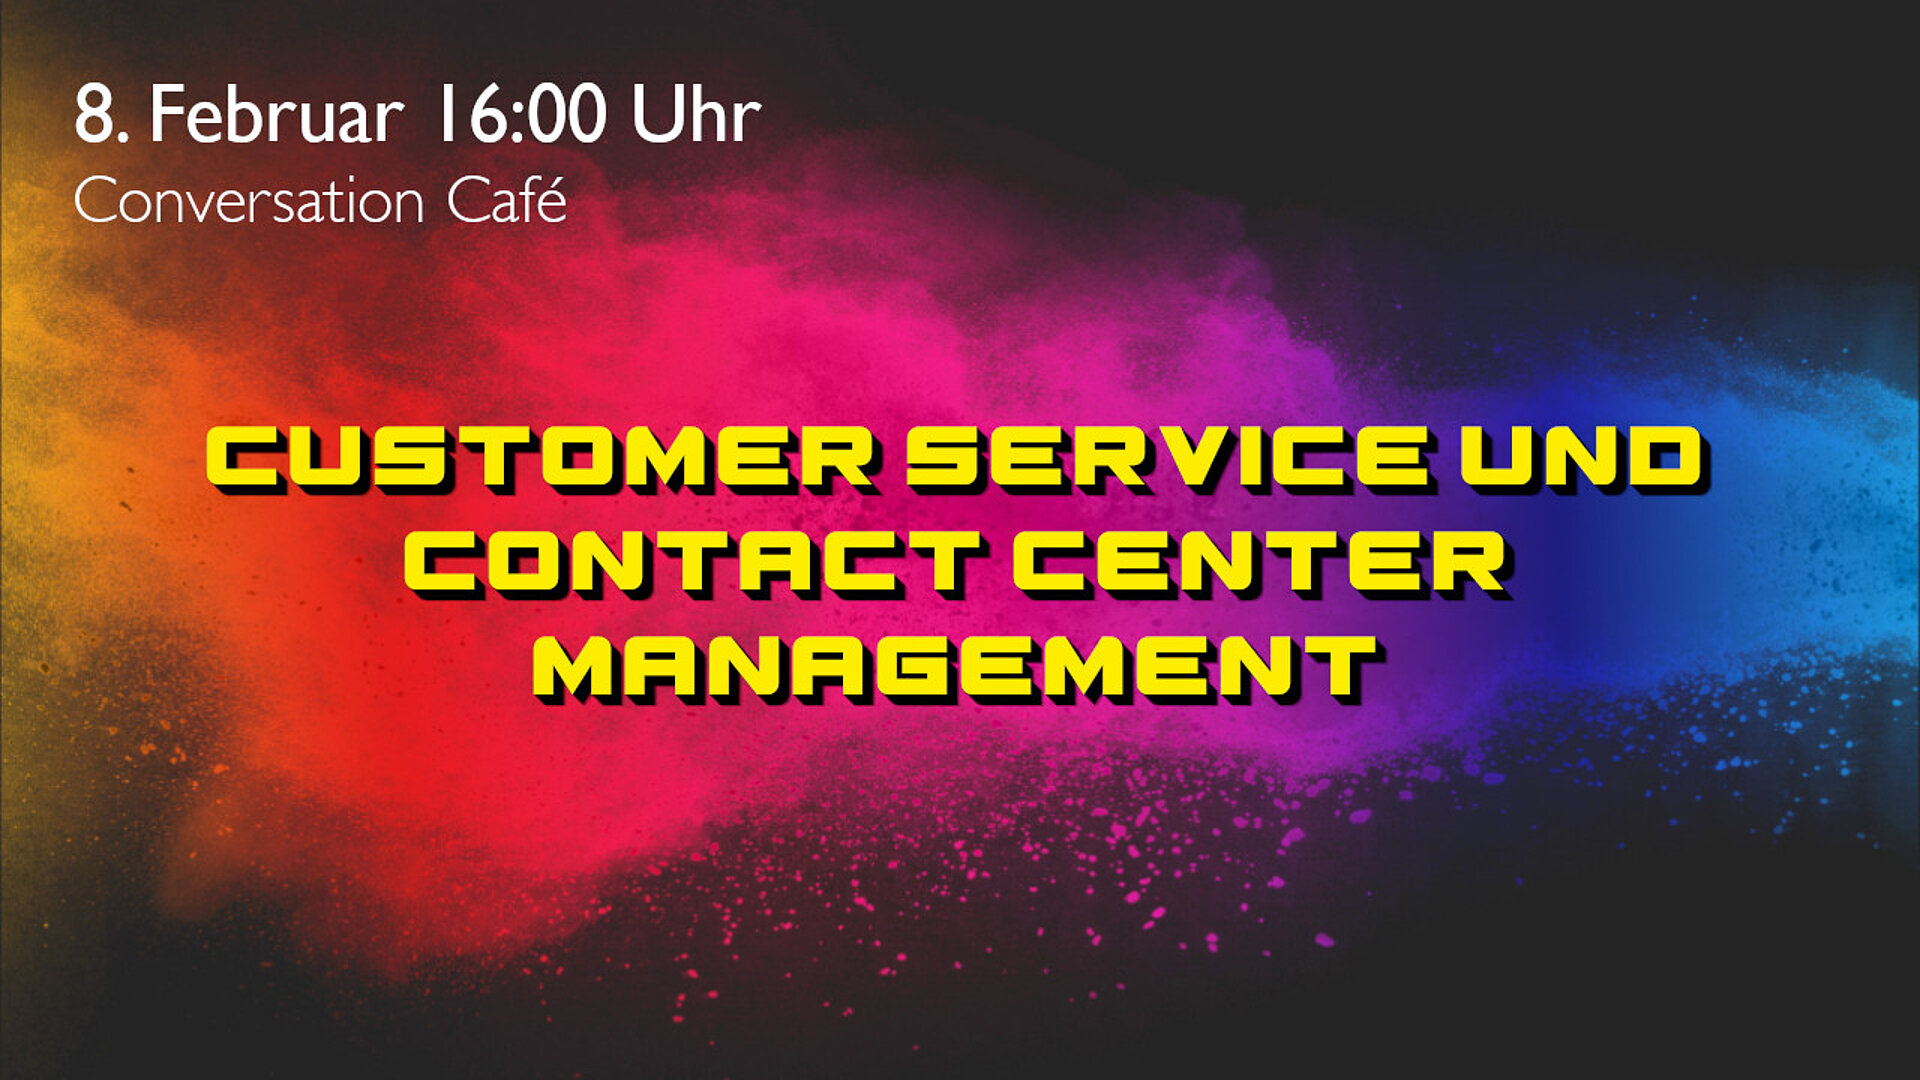 Conversation Café - Customer Service Management und Contact Center Management